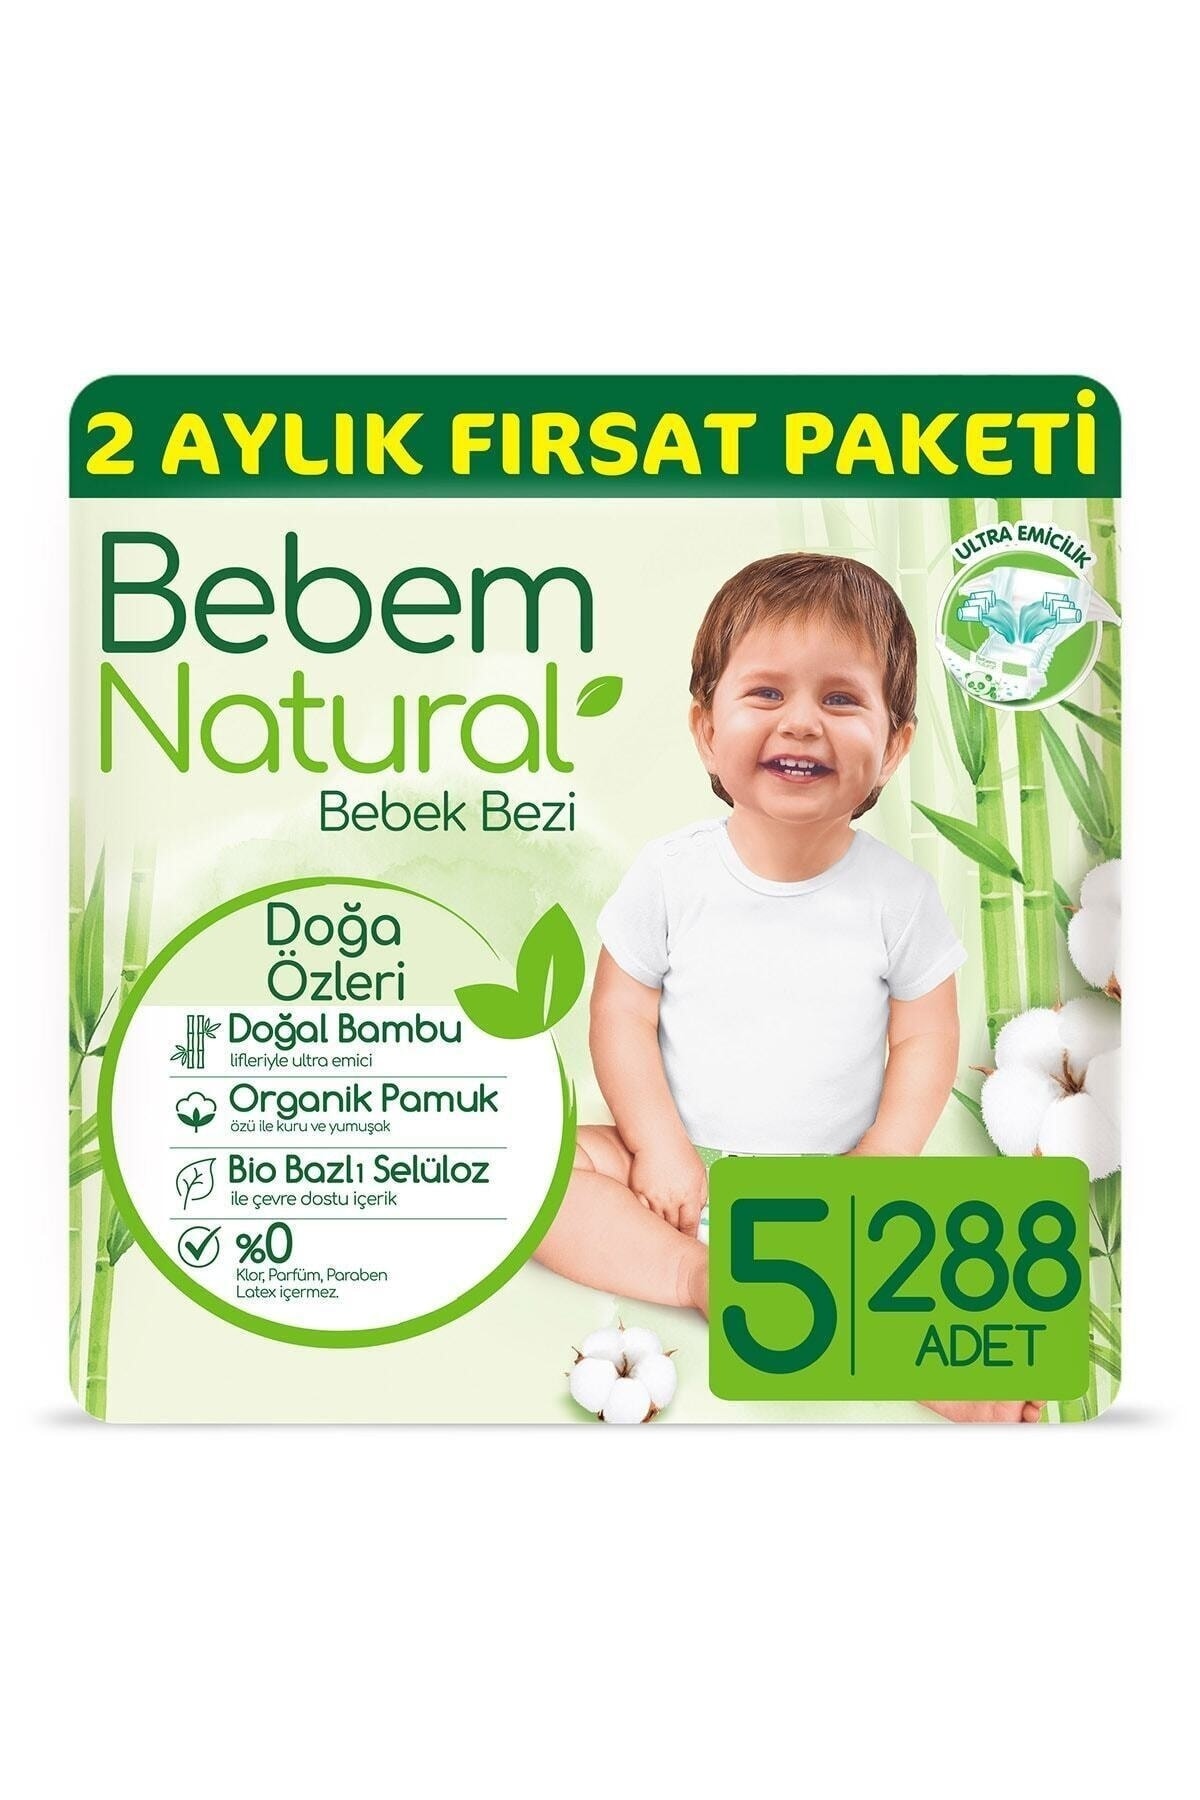 Bebem Natural Bebek Bezi 5 Beden Junior 2 Aylık Fırsat Paketi 288 Adet